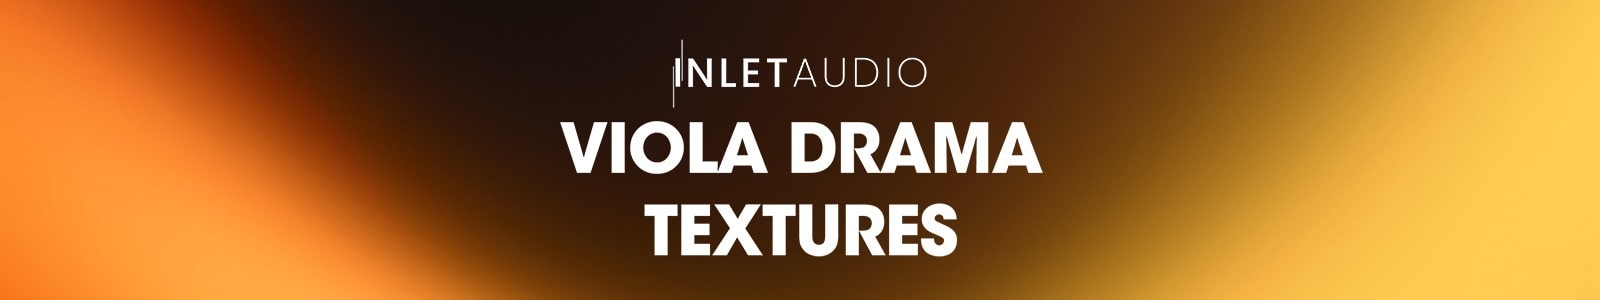 Inlet Audio Viola Drama Textures